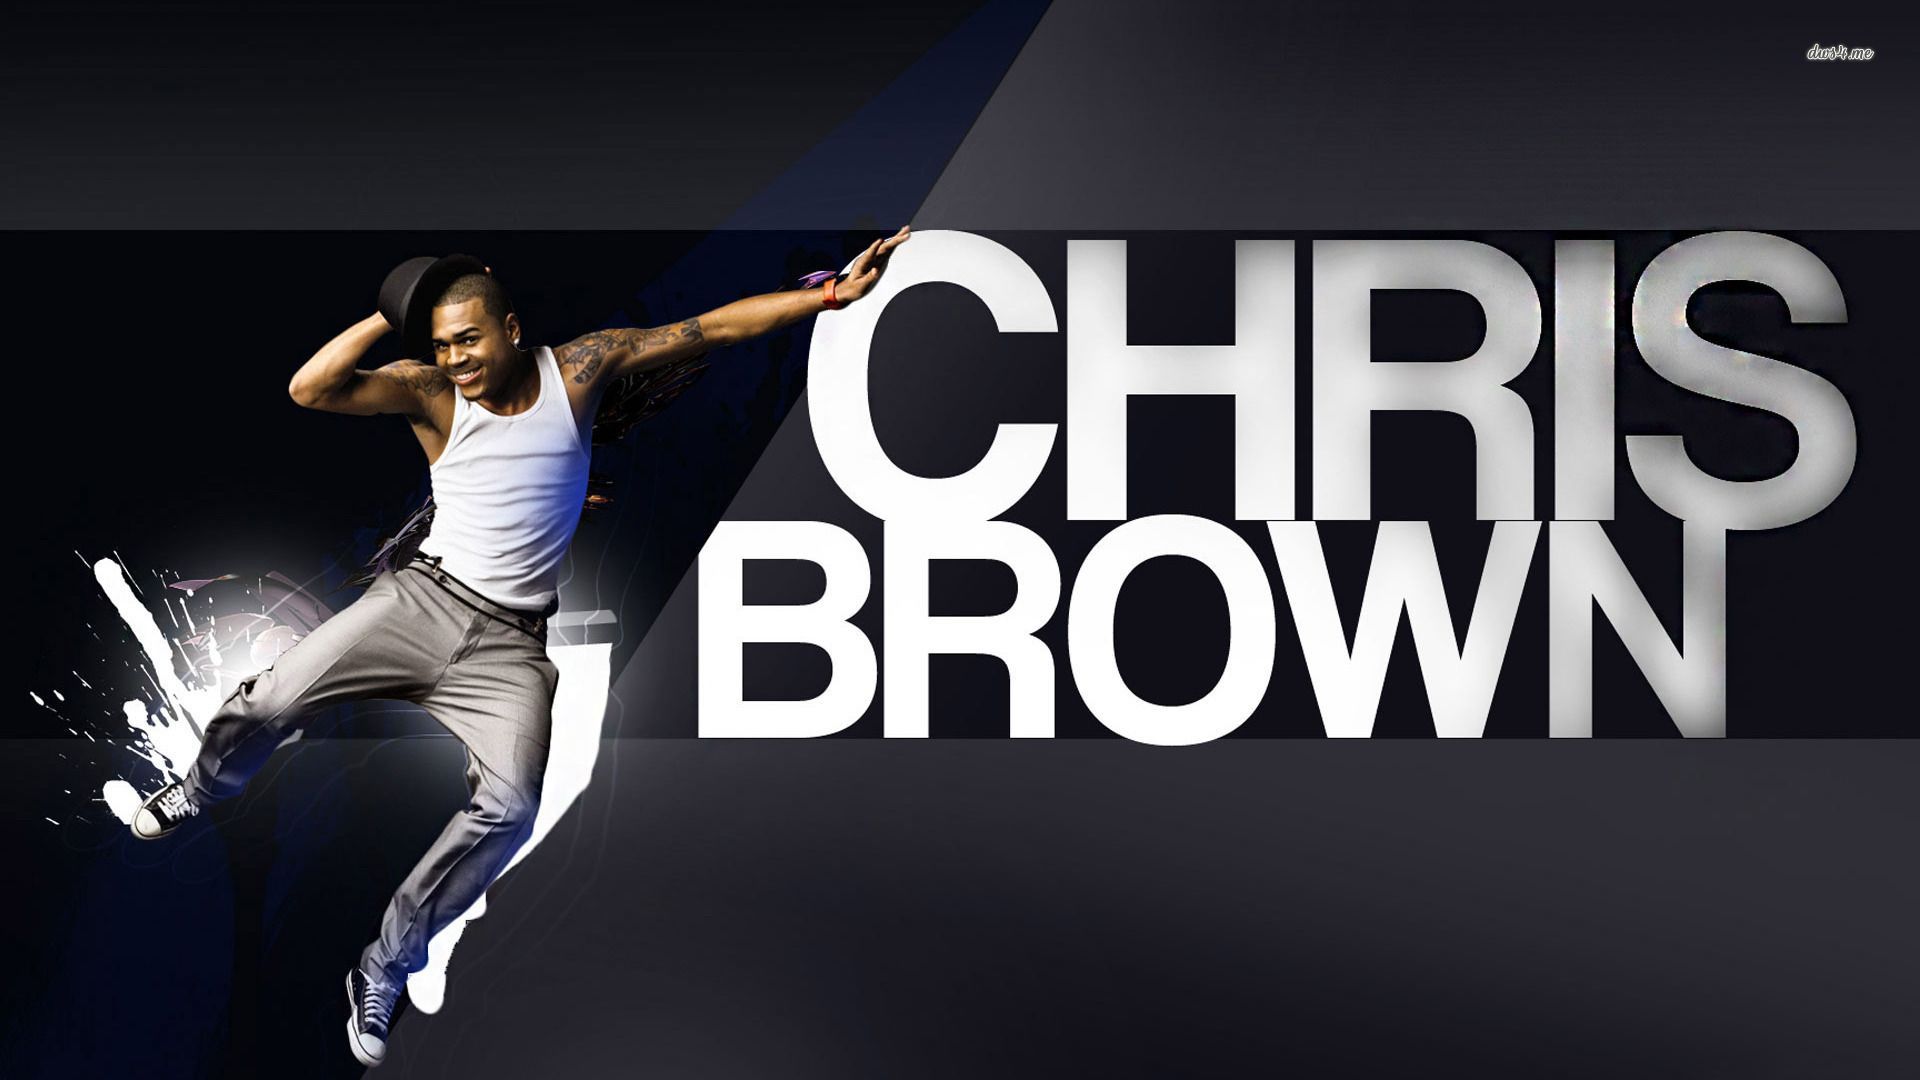 Chris Brown wallpaper - Music wallpapers -